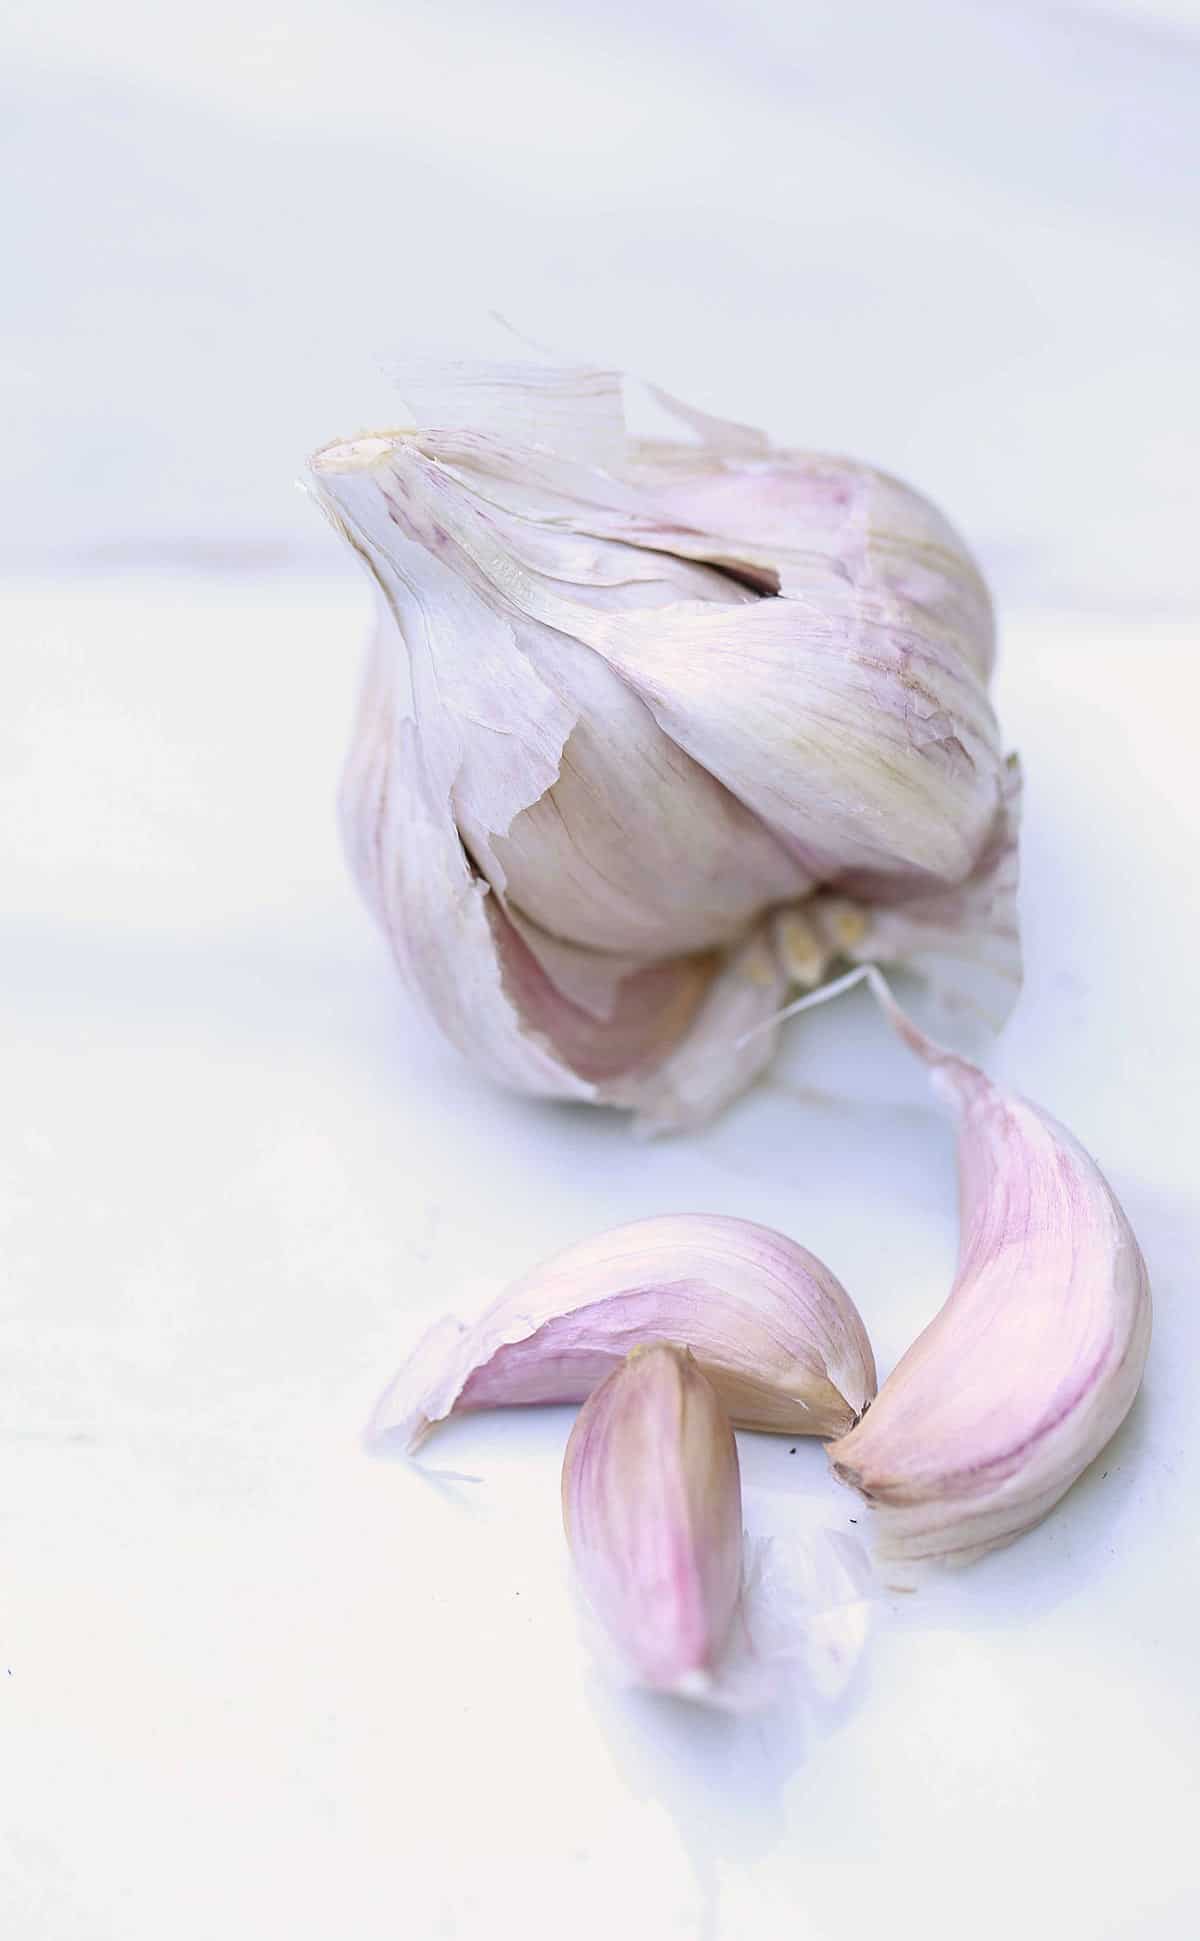 fresh purple garlic cloves and head